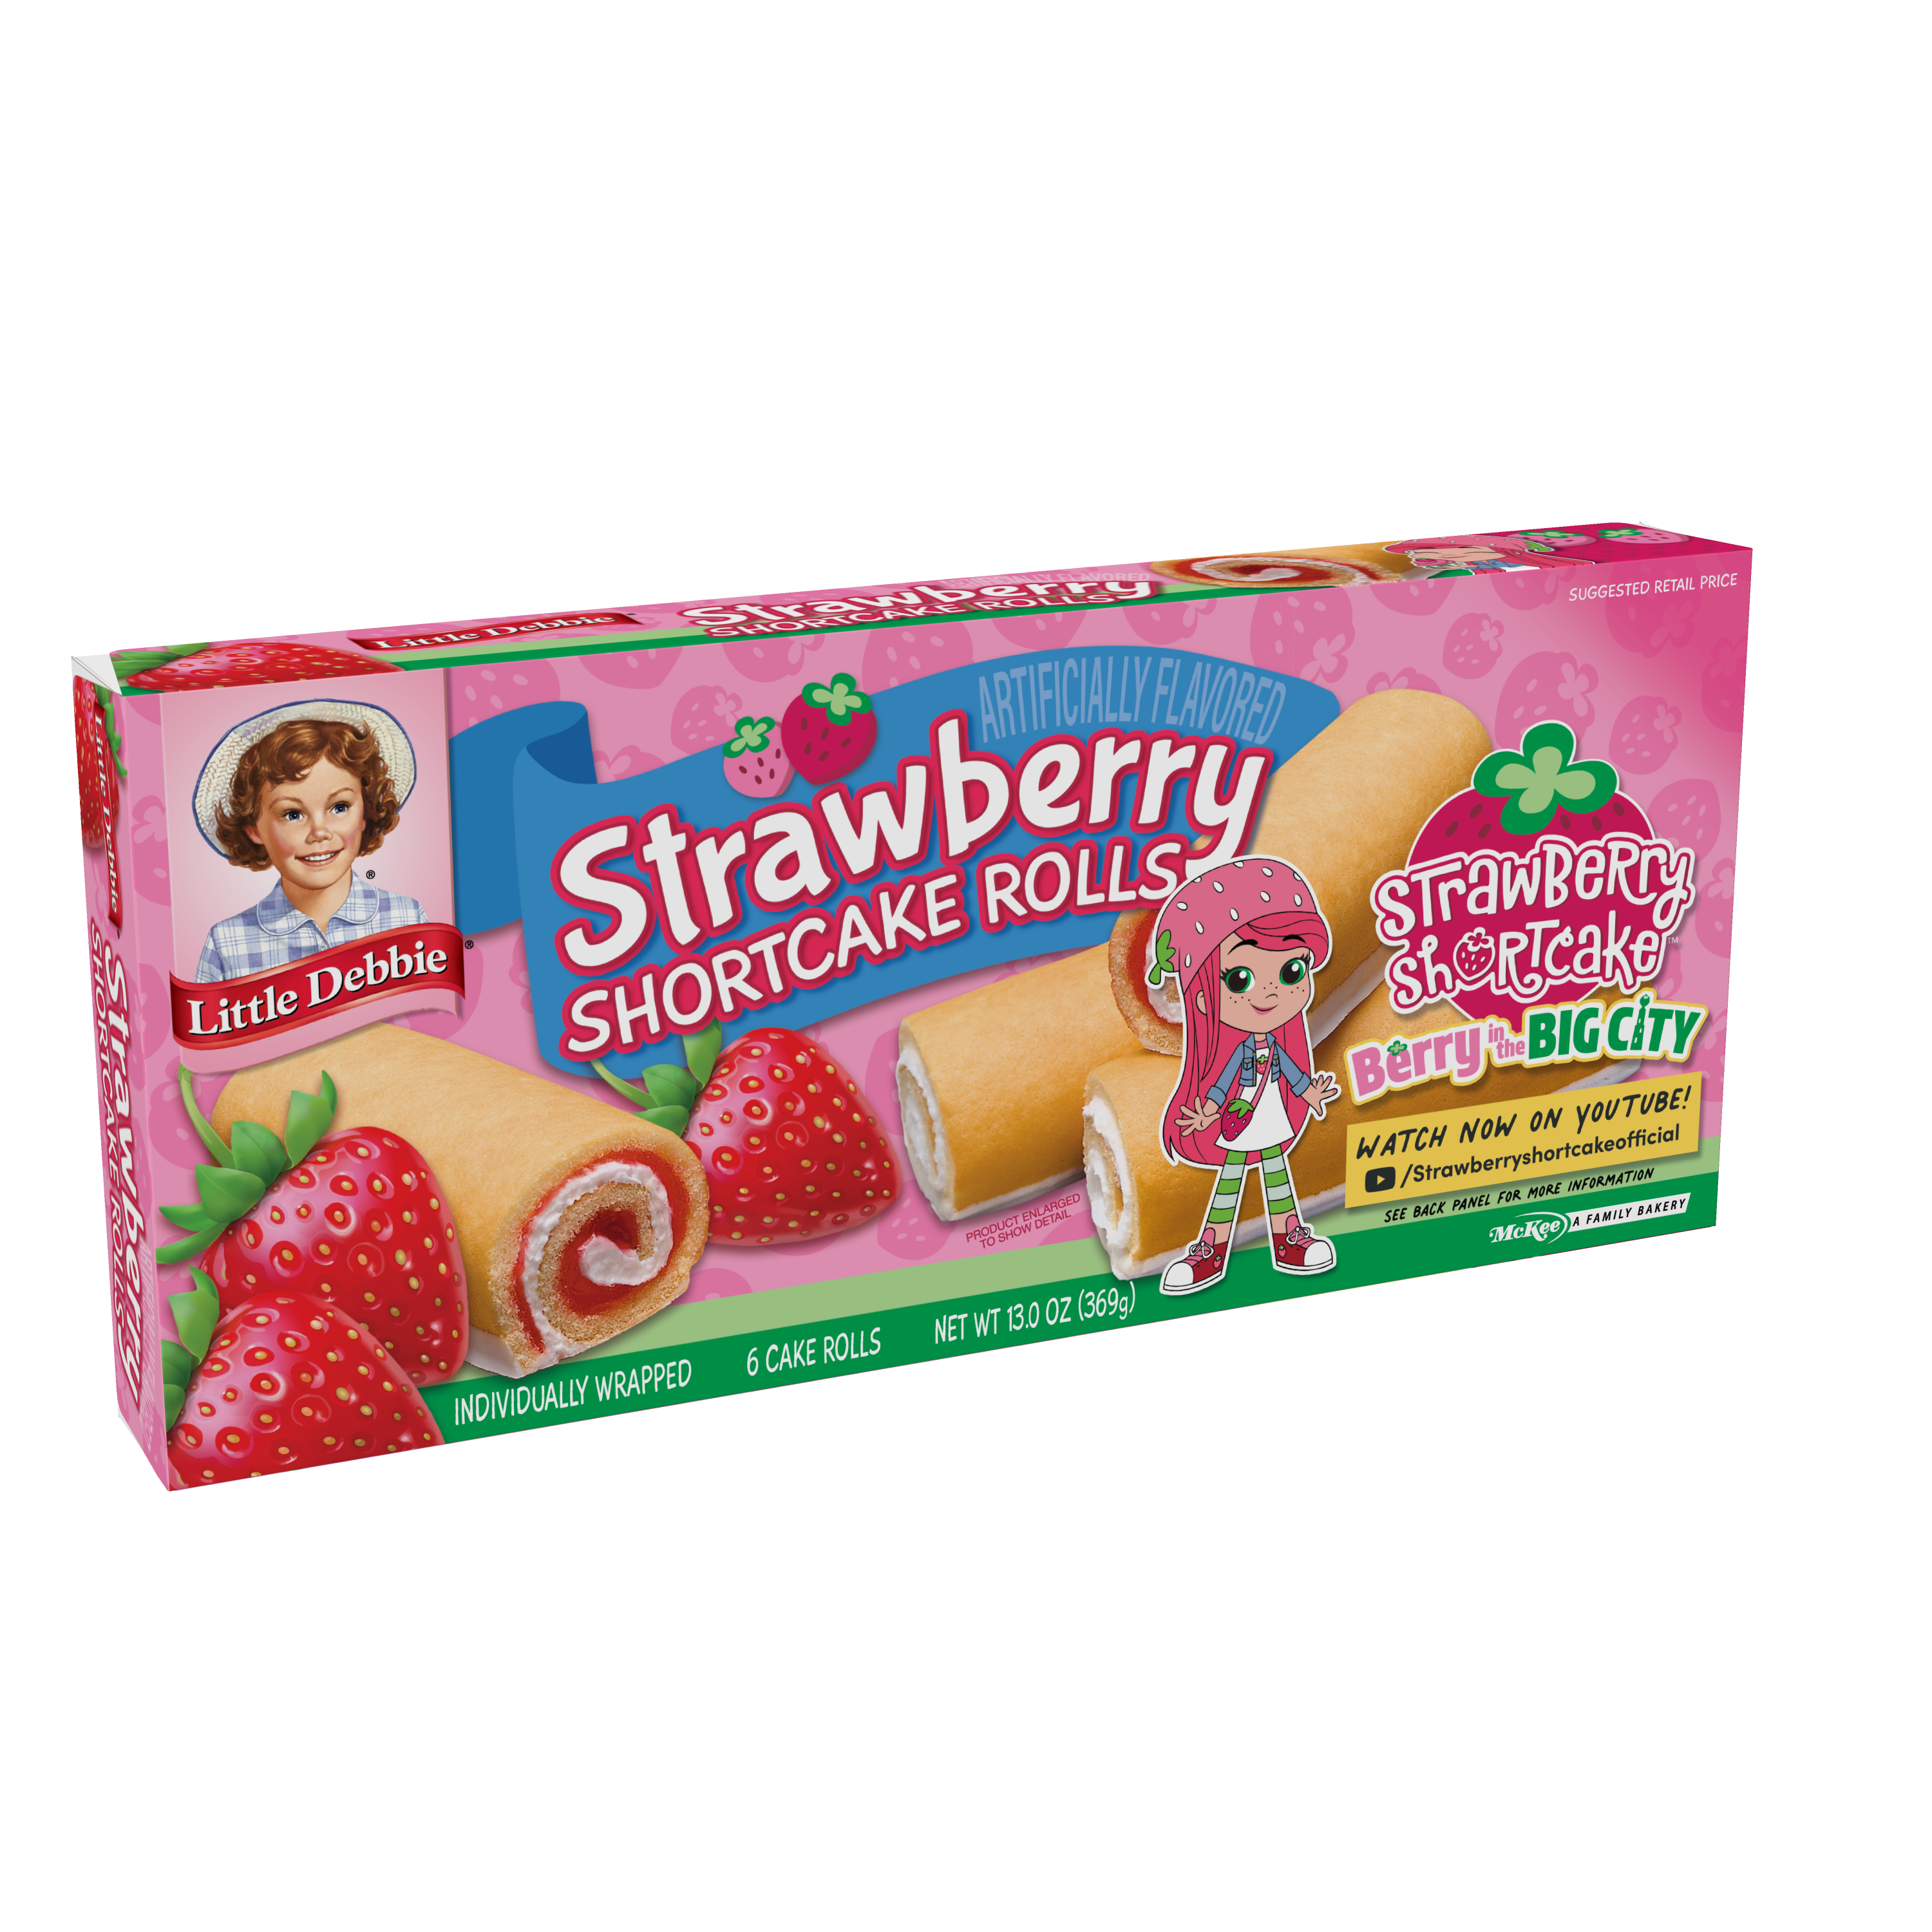 Little Debbie - Strawberry Short cake